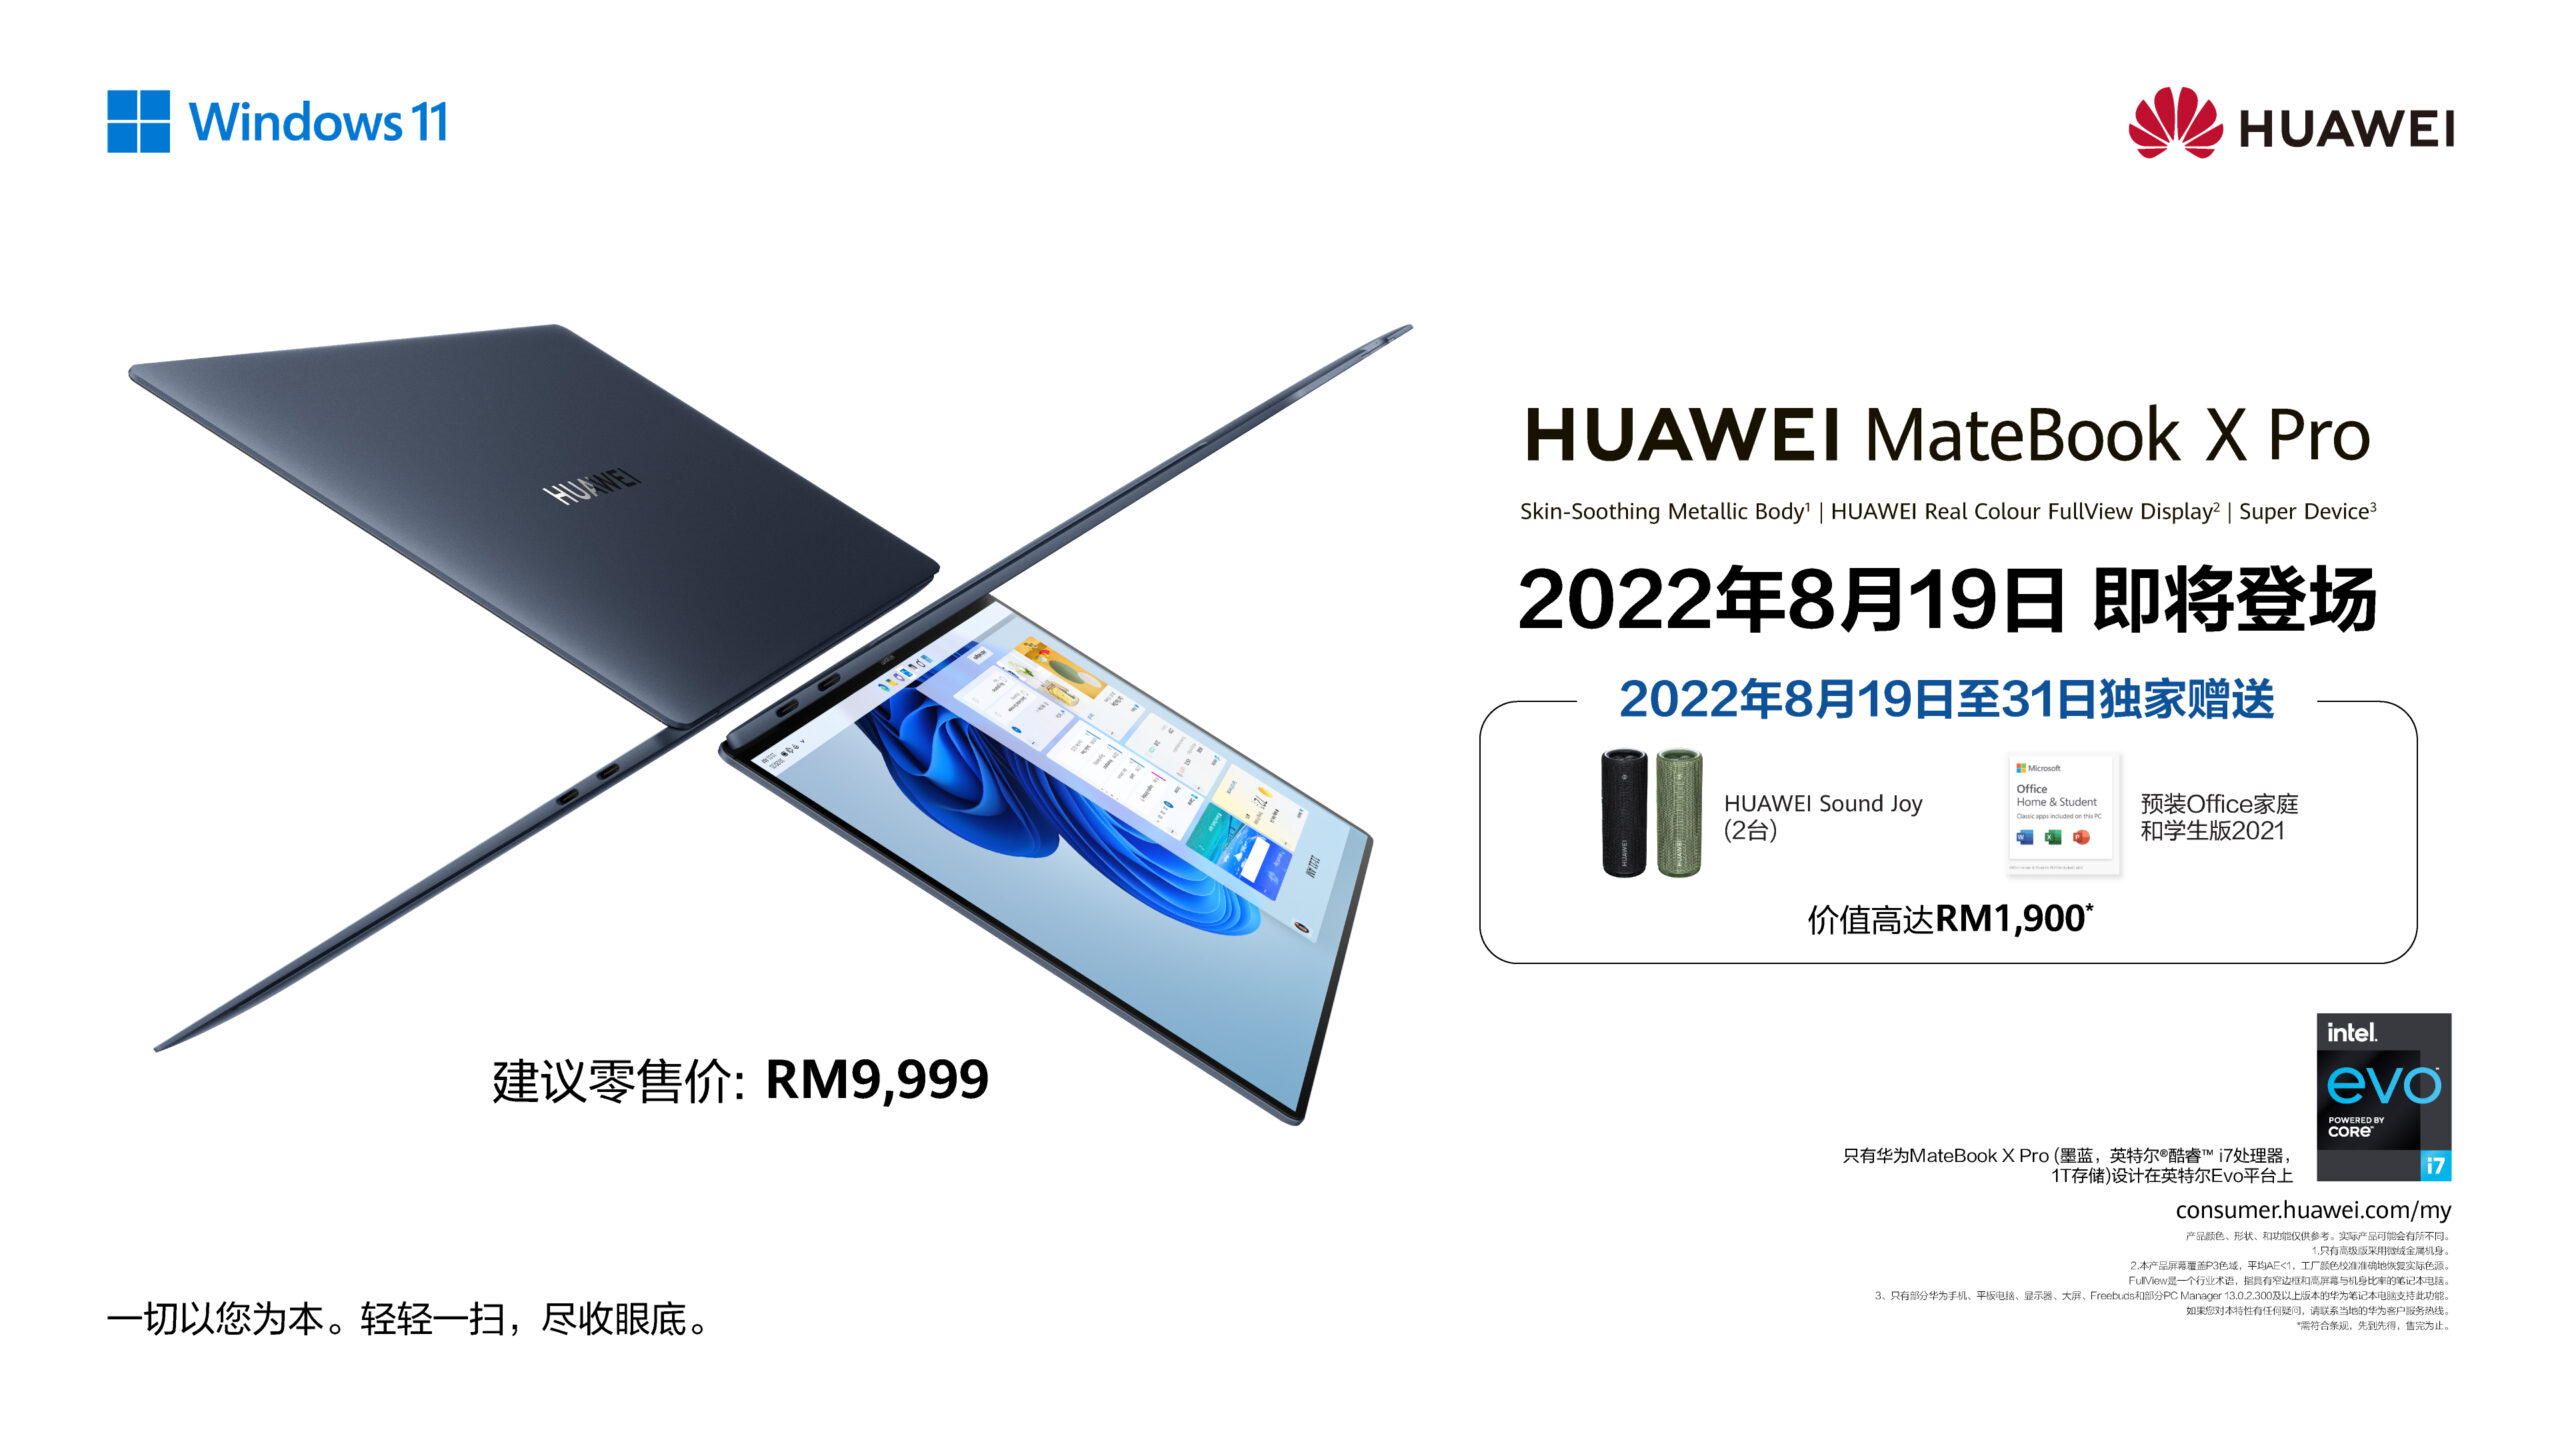 CN 顶级轻薄本 HUAWEI MateBook X Pro 8月19 发布 scaled